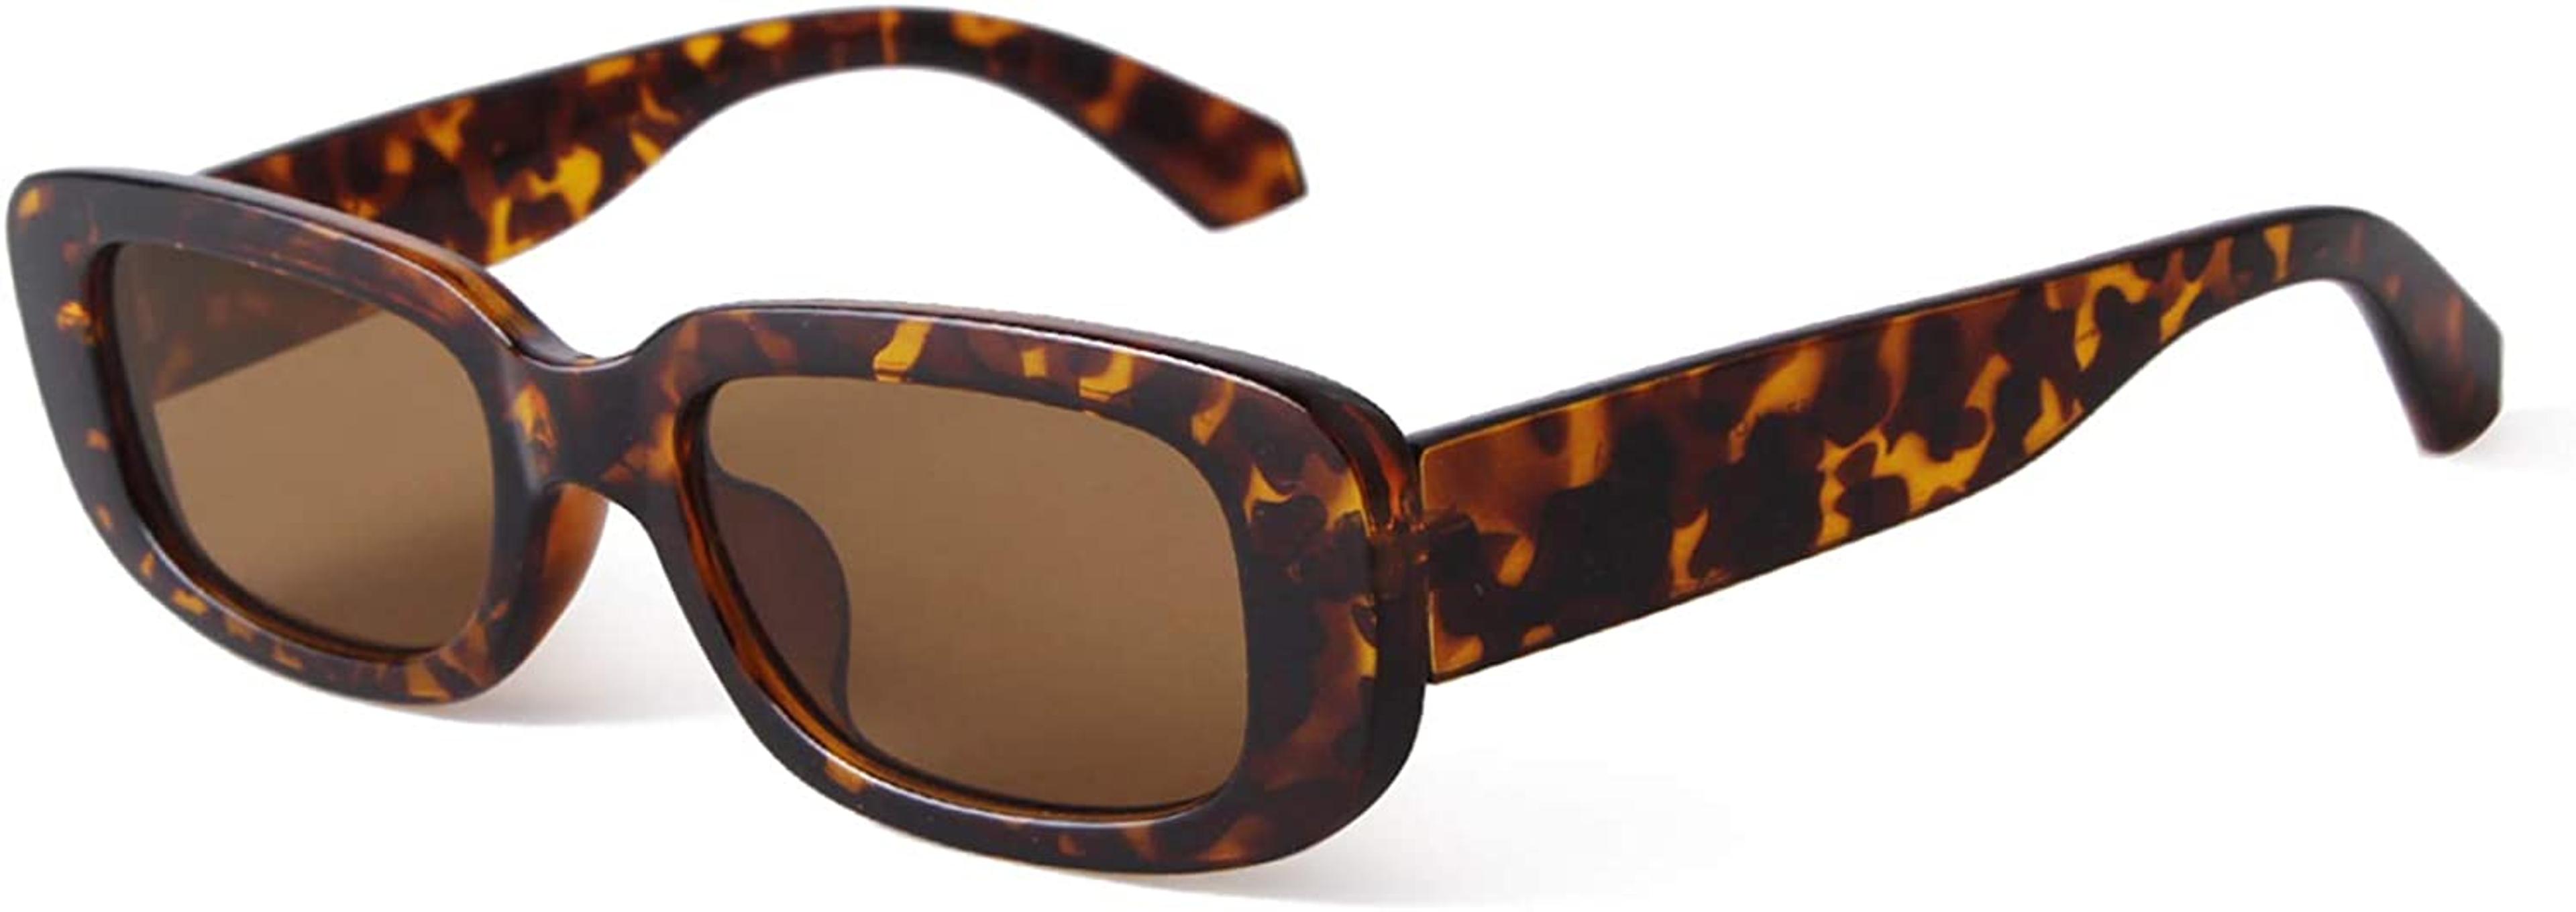 GIFIORE Trendy Rectangle Sunglasses Retro Cool 90s Vintage Fashion Narrow Square Frame UV400 Protection